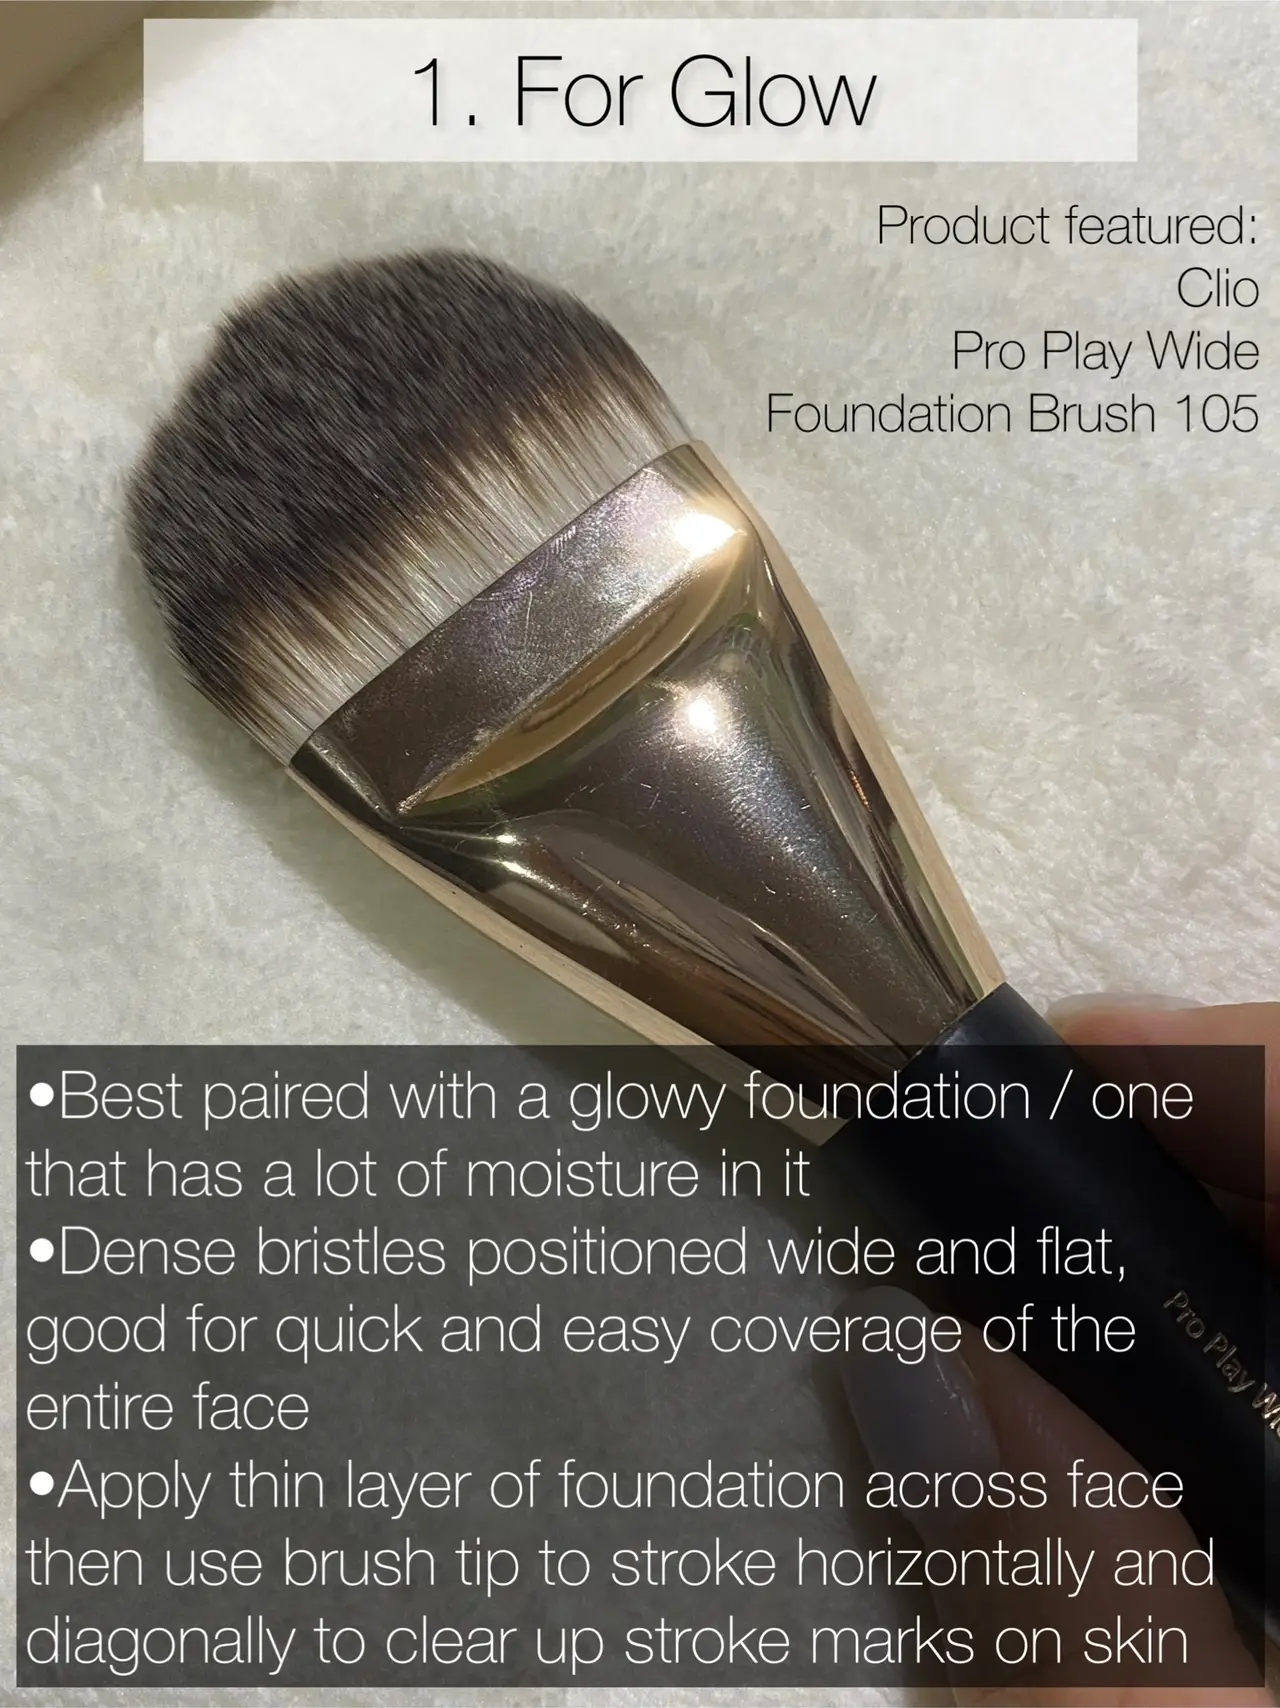 PRO Fan Highlighter Brush